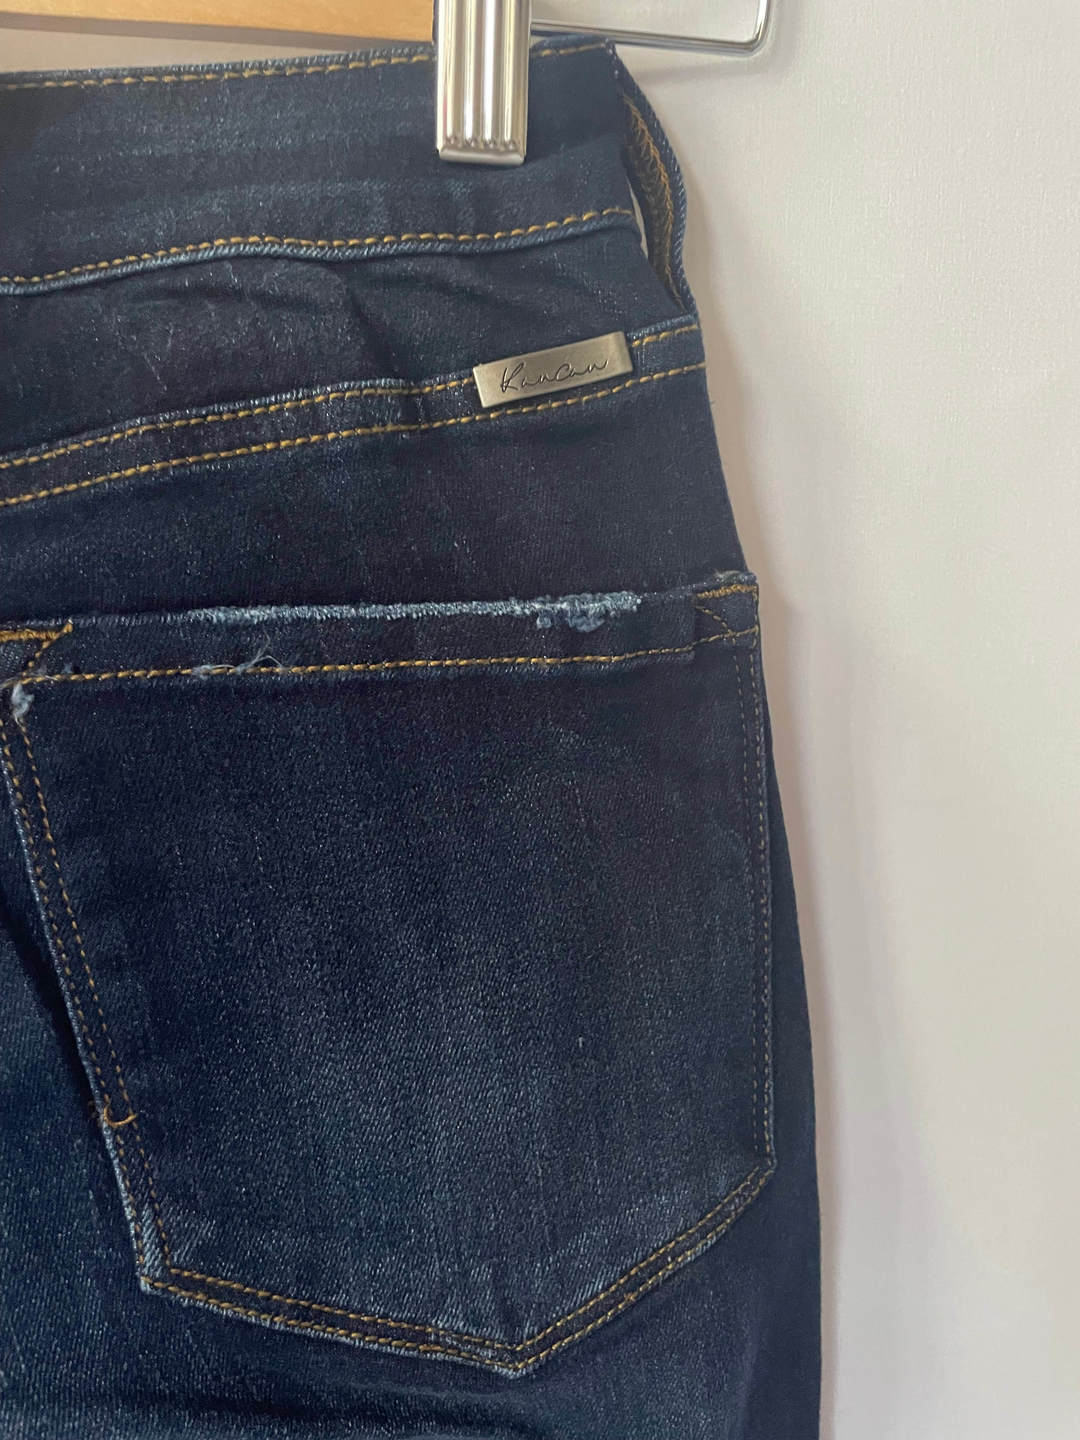 Curvy Button Front Clean Dark Jeans - Kacan